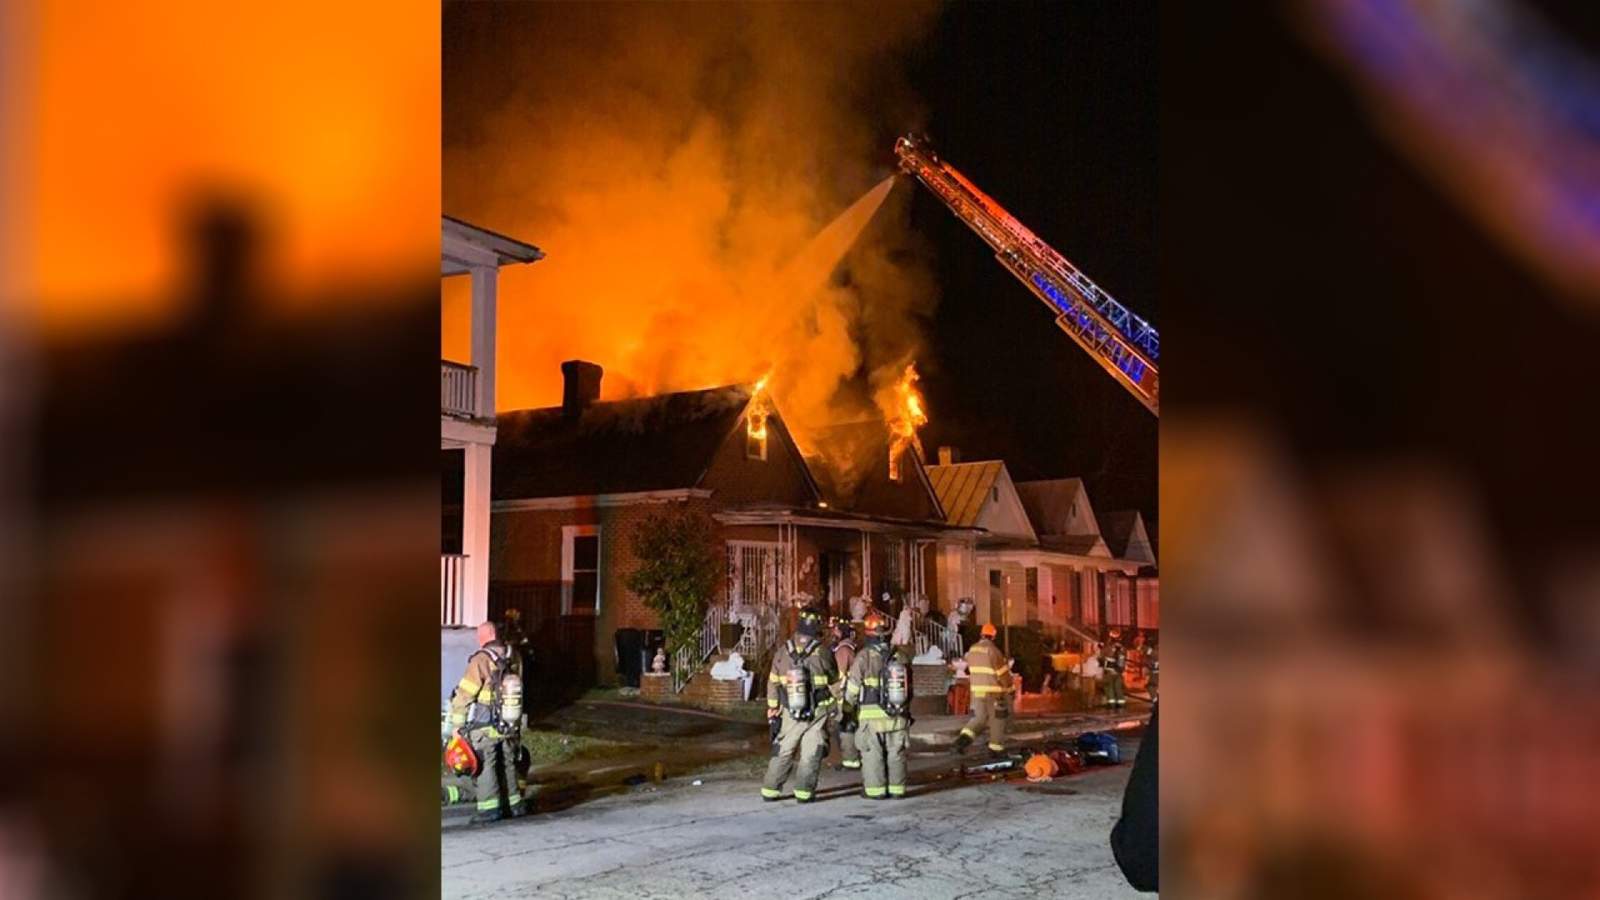 Crews respond after fire that destroyed Danville home rekindles